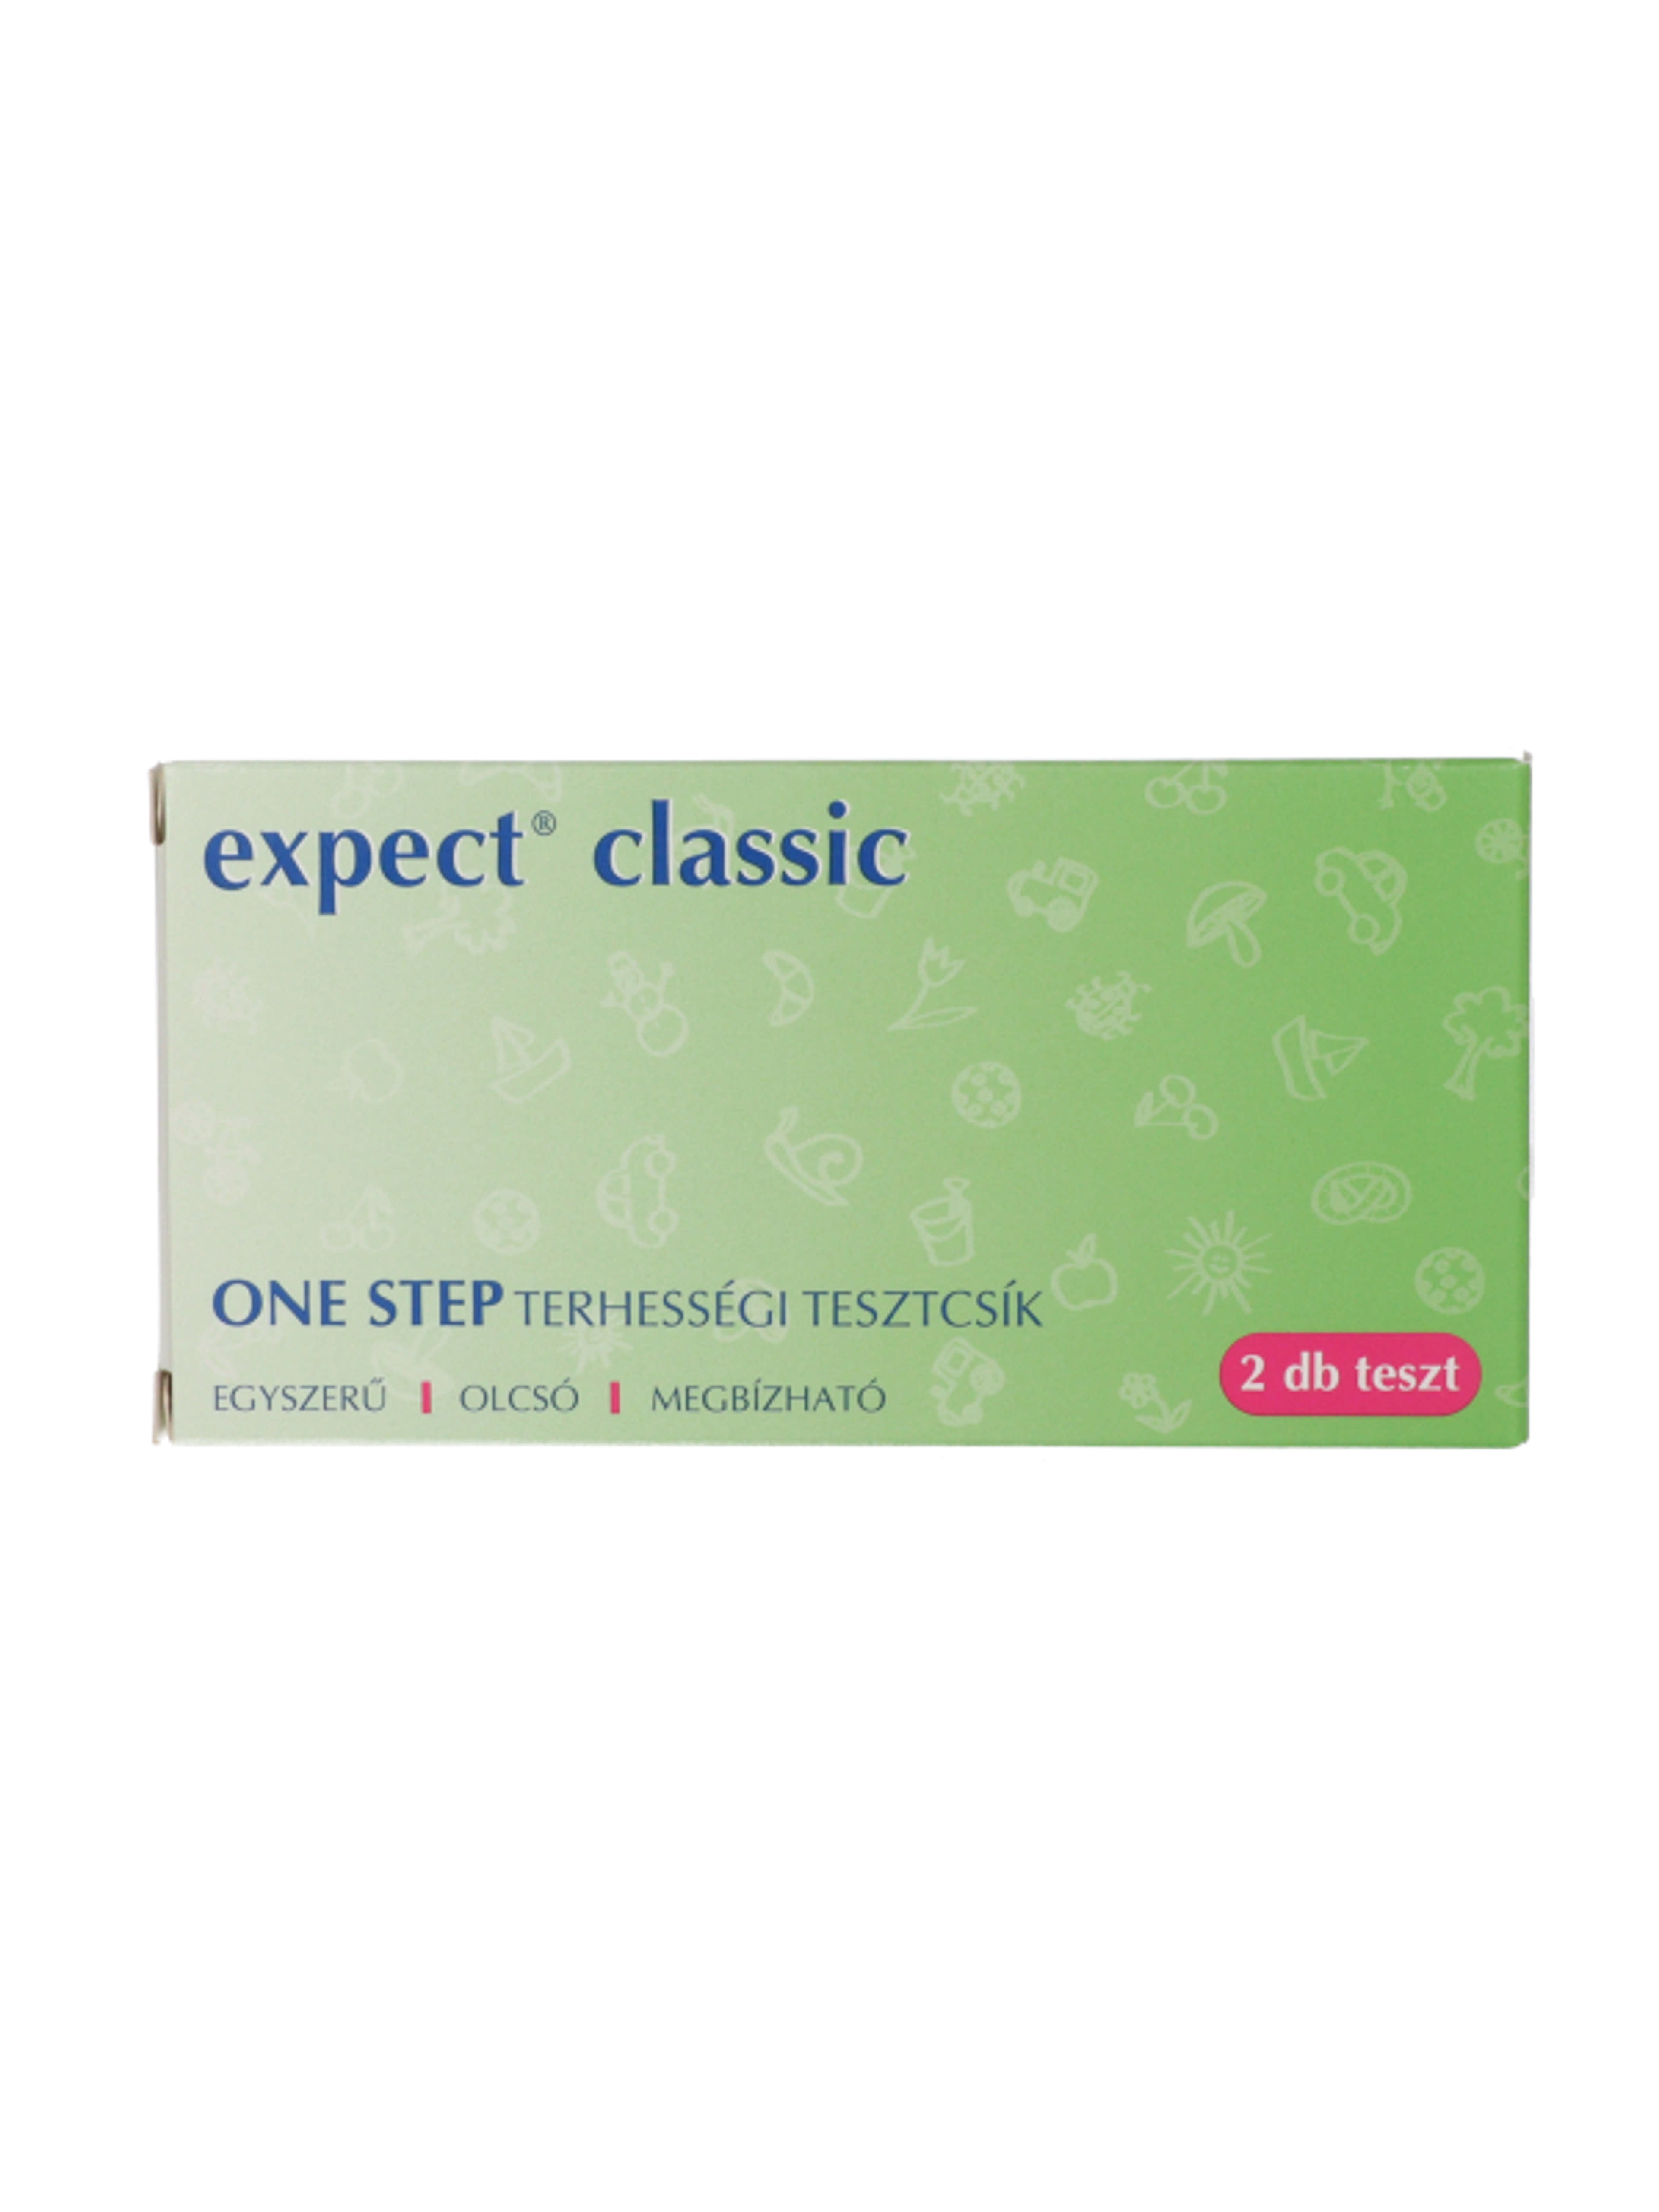 Expect Classic One Step terhességi tesztcsík - 2 db